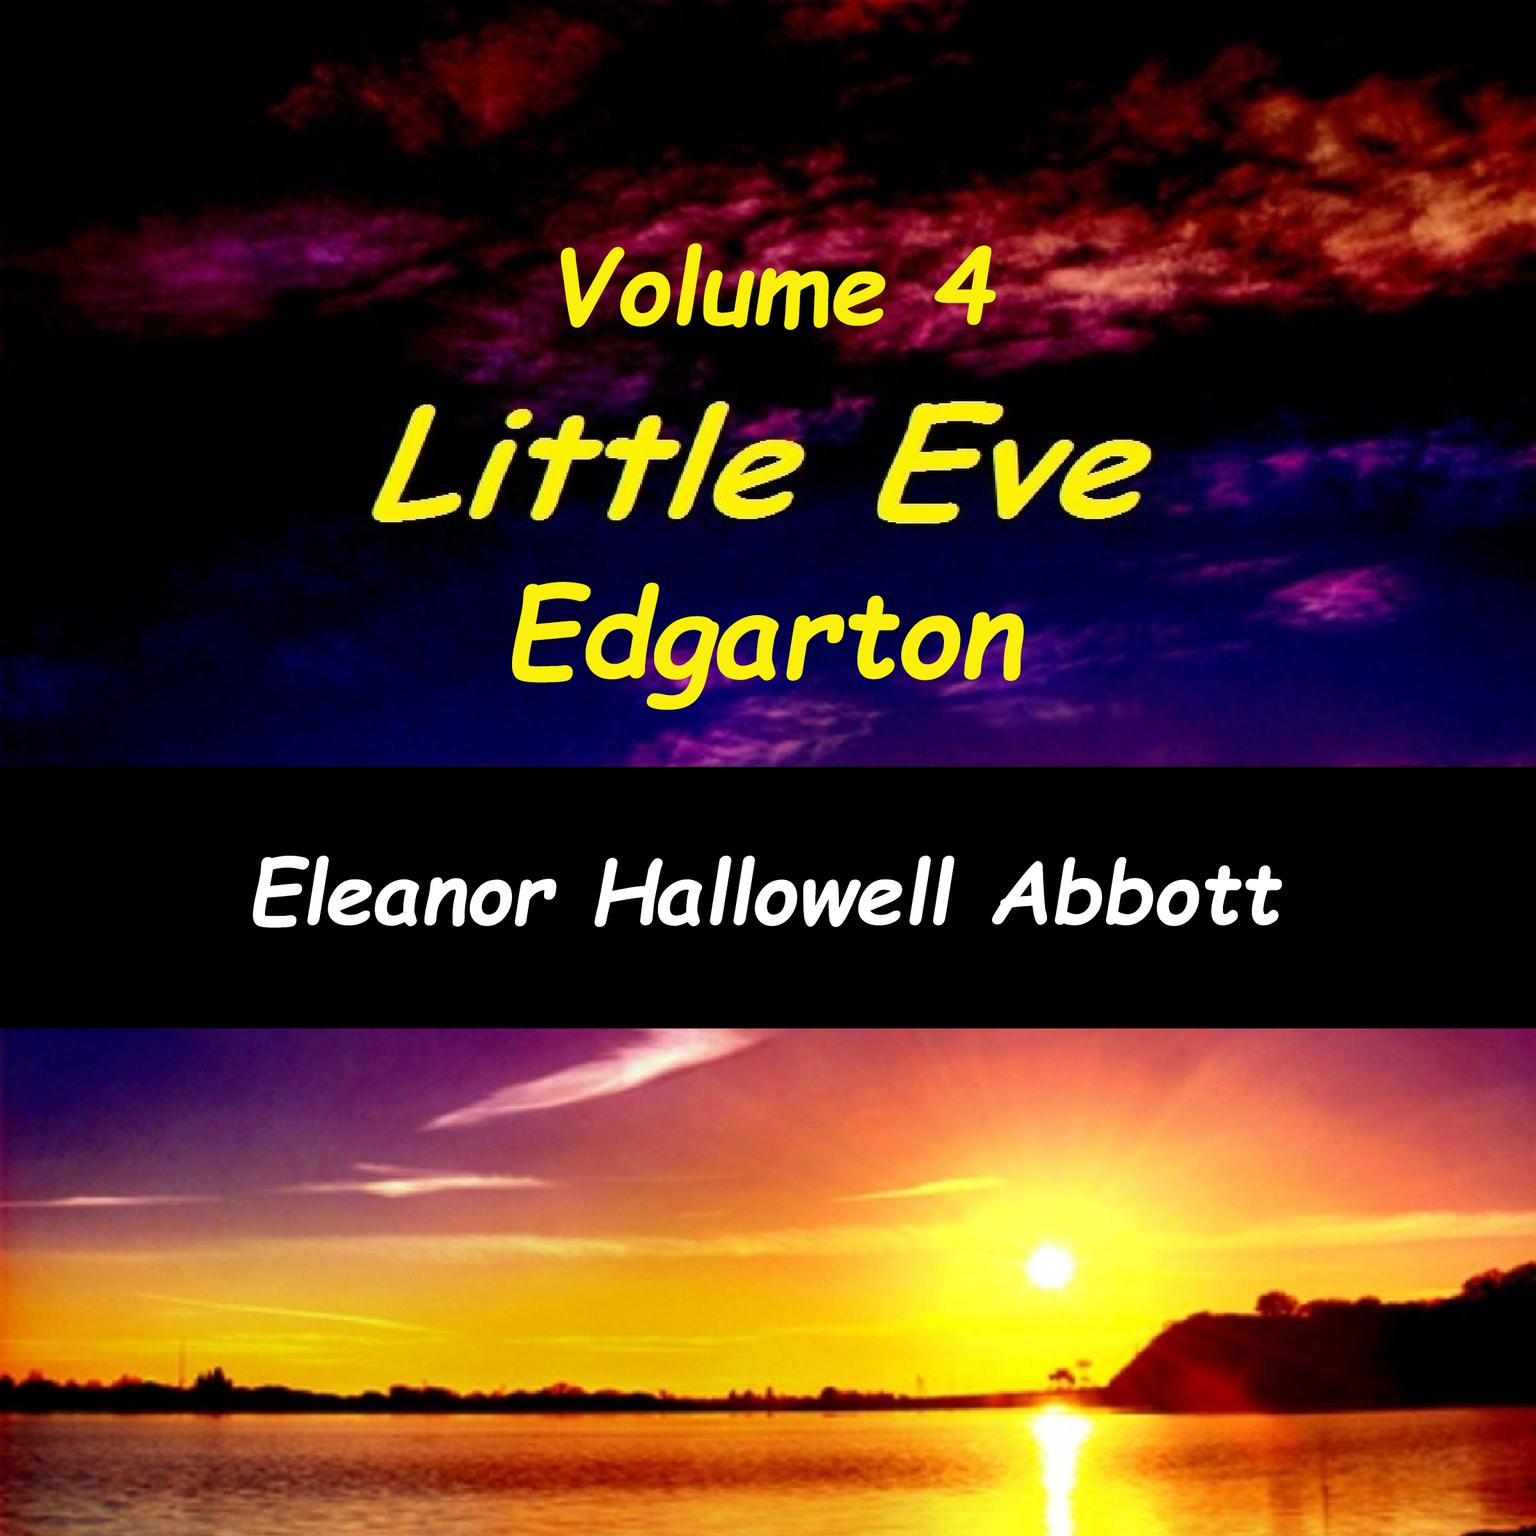 Little Eve Edgarton Volume 4 (Abridged) Audiobook, by Eleanor Hallowell Abbott